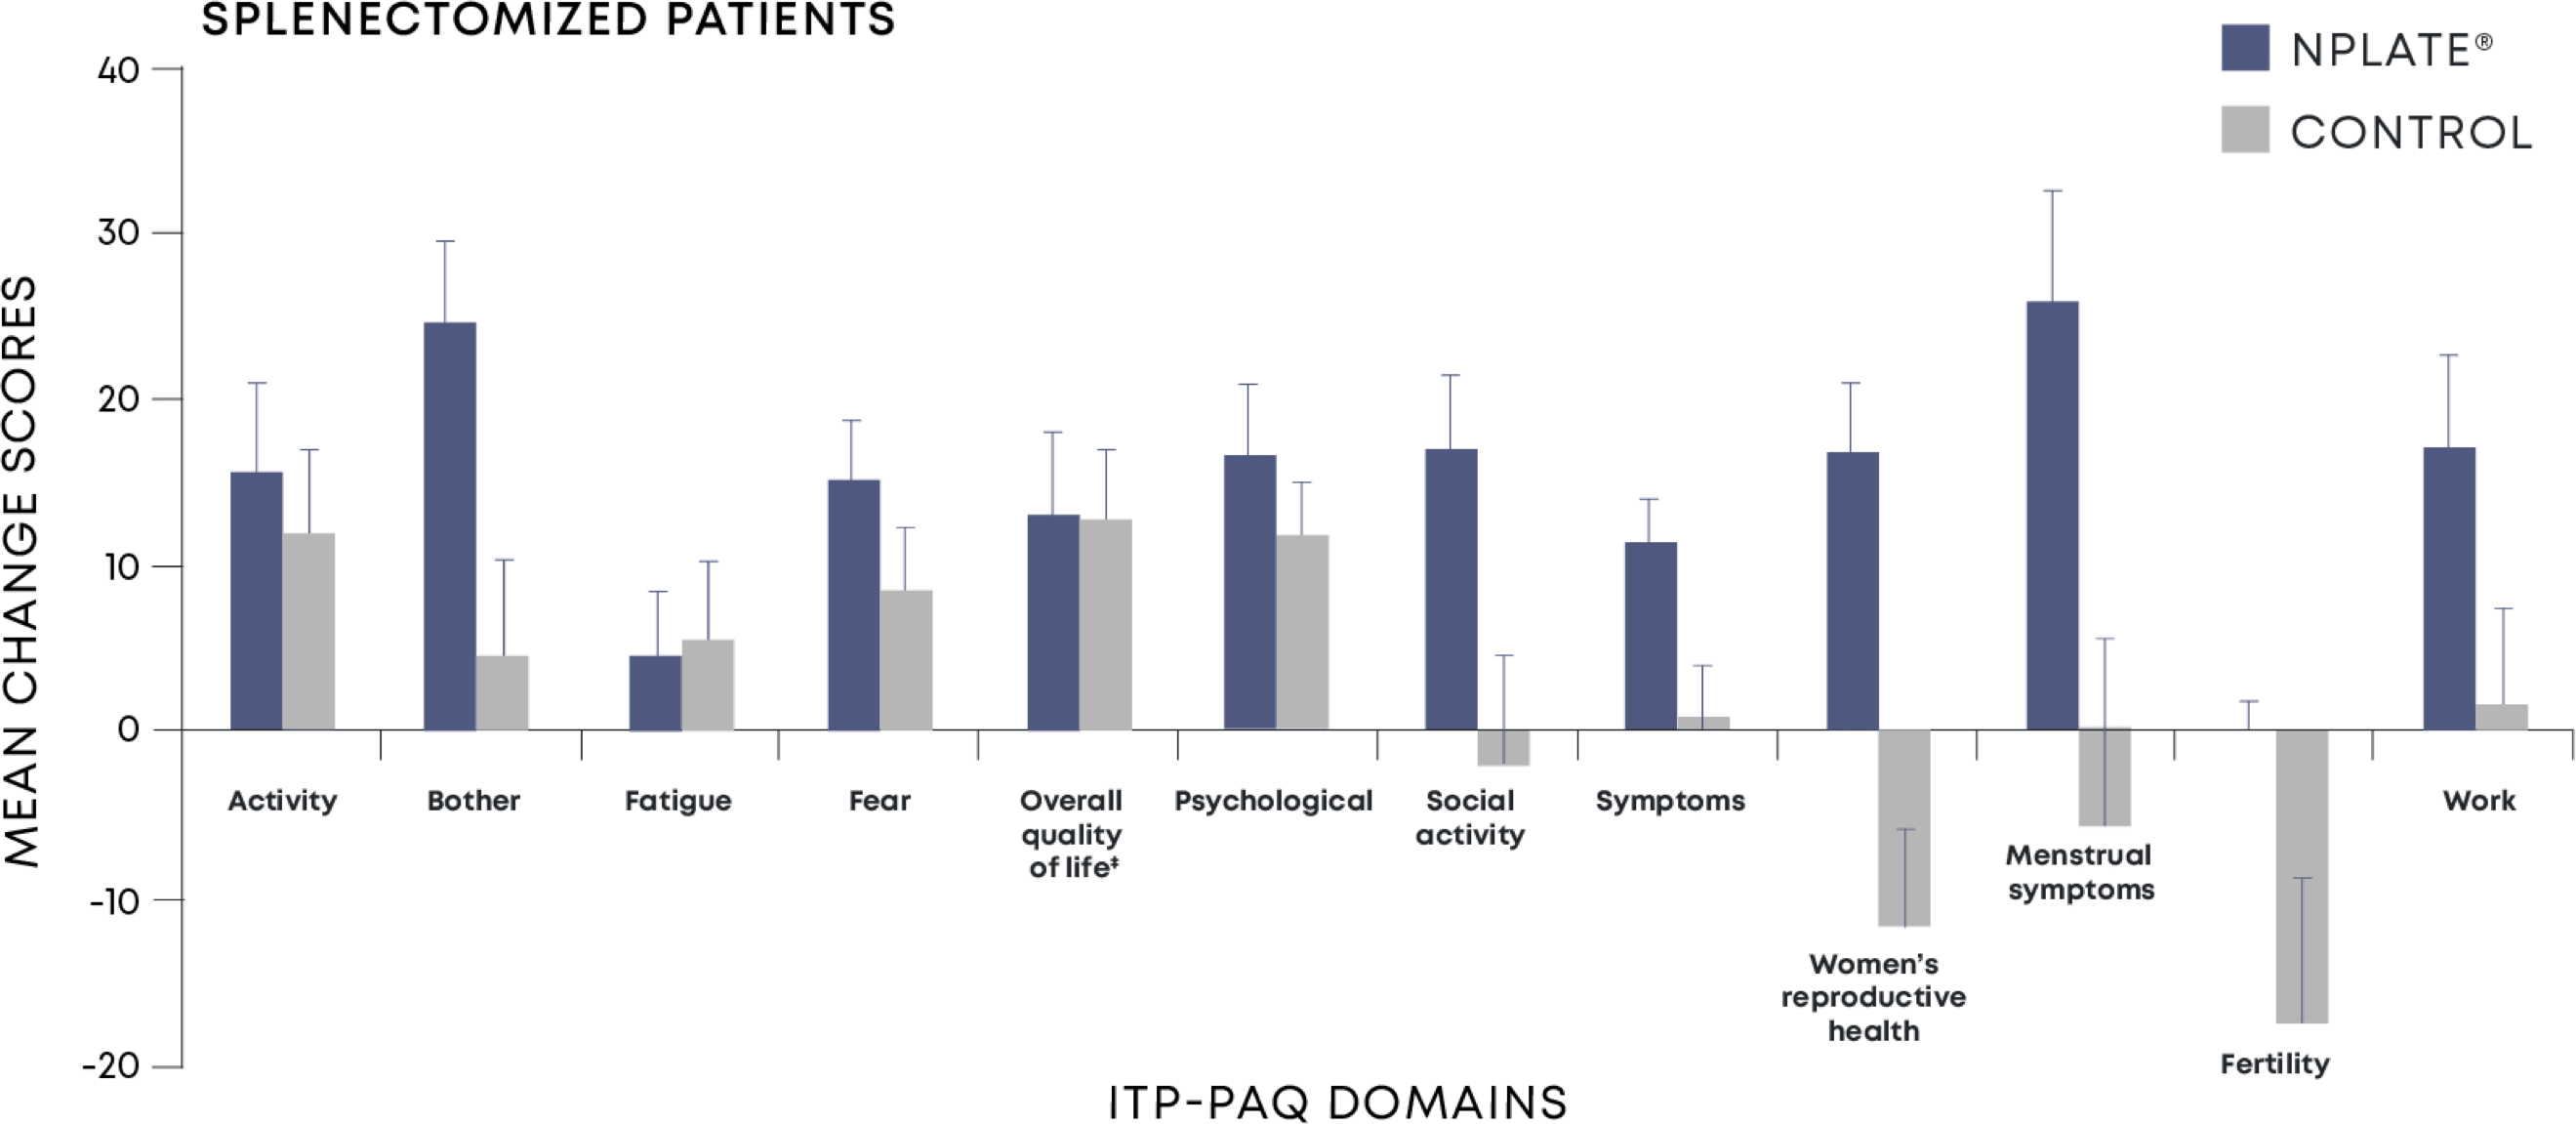 ITP patient assessment questionnaire mean change scores from baseline for splenectomized patients